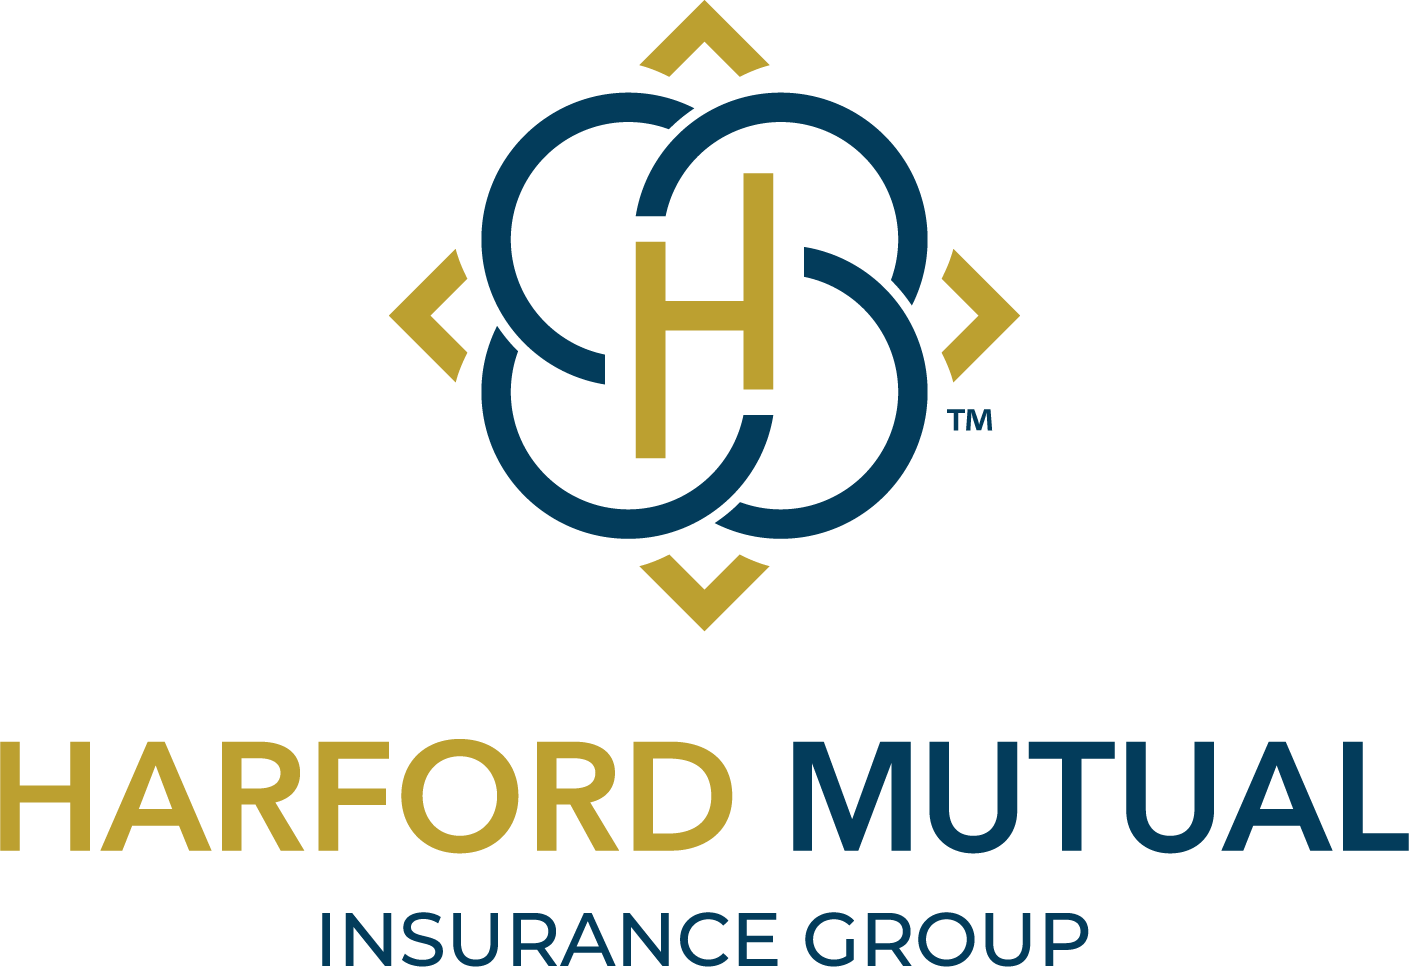 Harford Mutual Logo